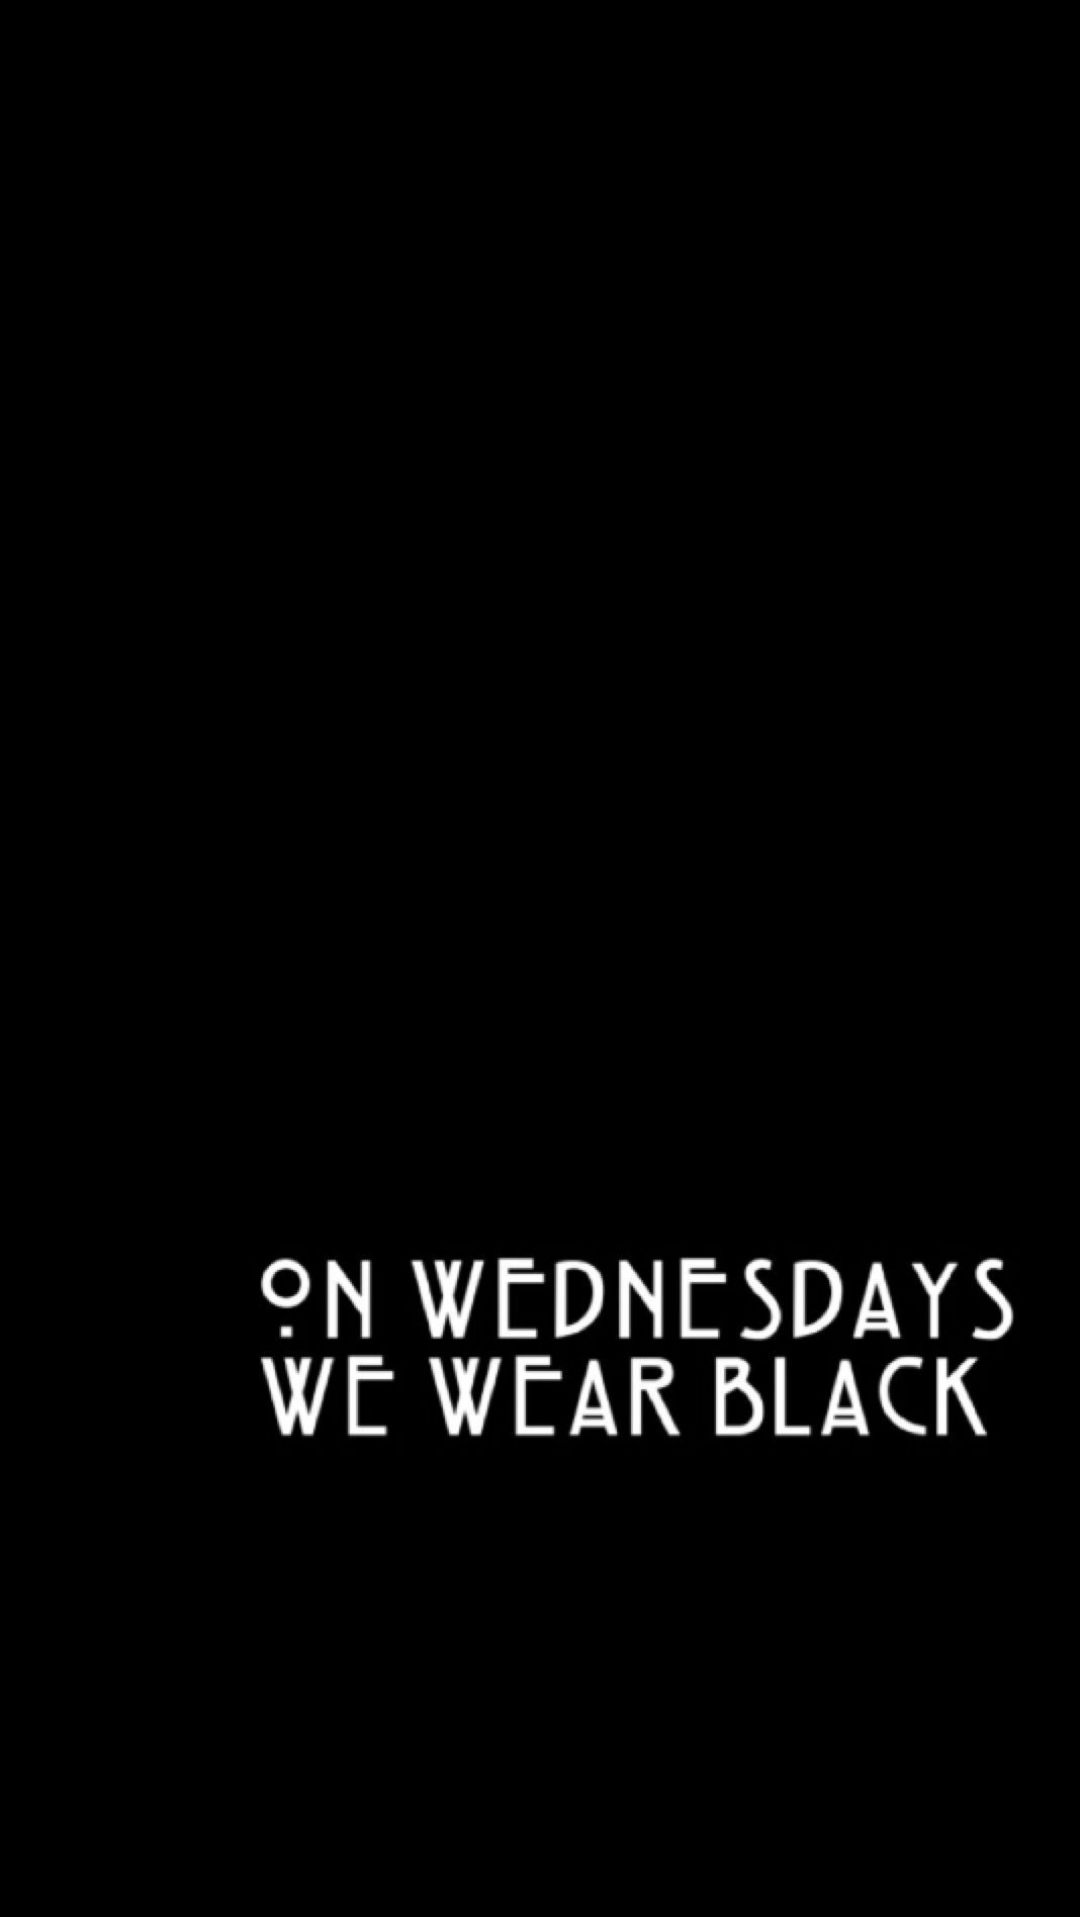 On wednesdays we wear black - Horror